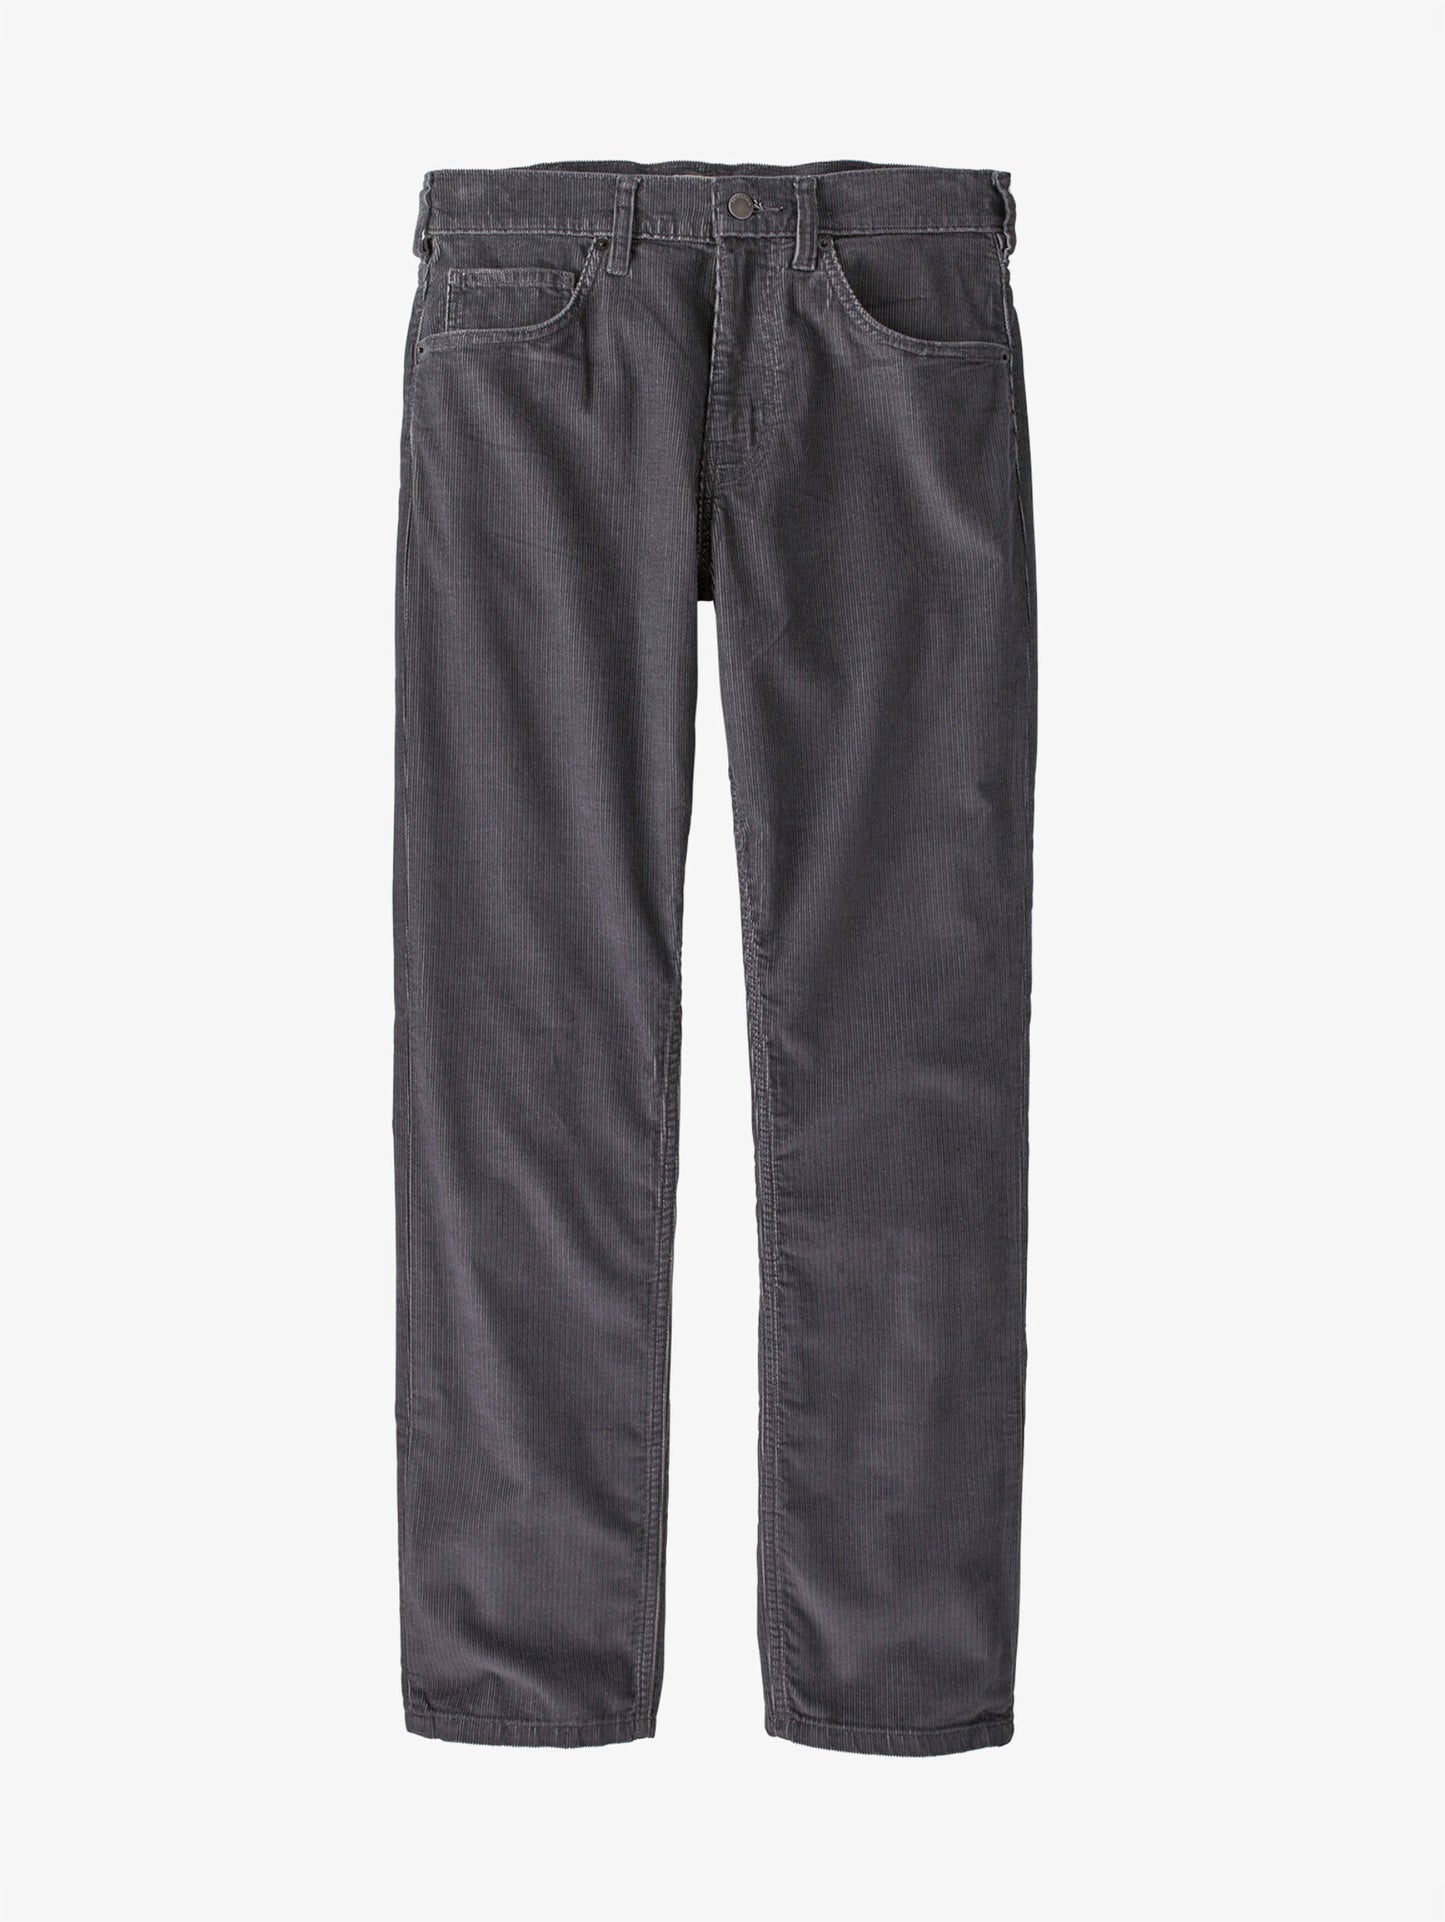 Men's Organic Cotton Corduroy Jeans - Regular force grey